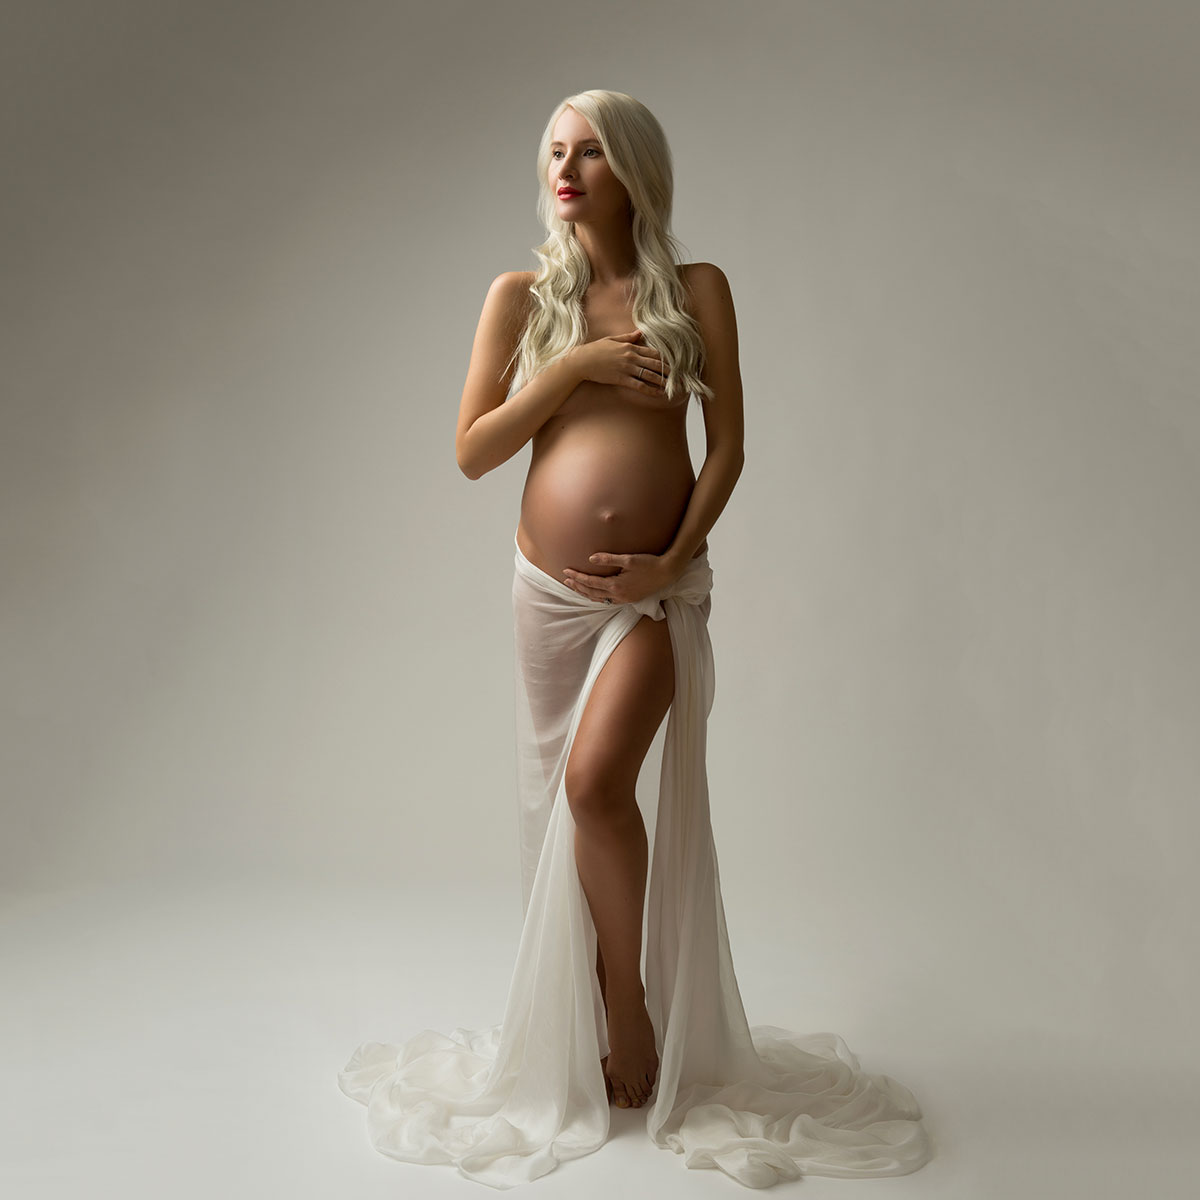 Blonde woman in studio posing for maternity portrait